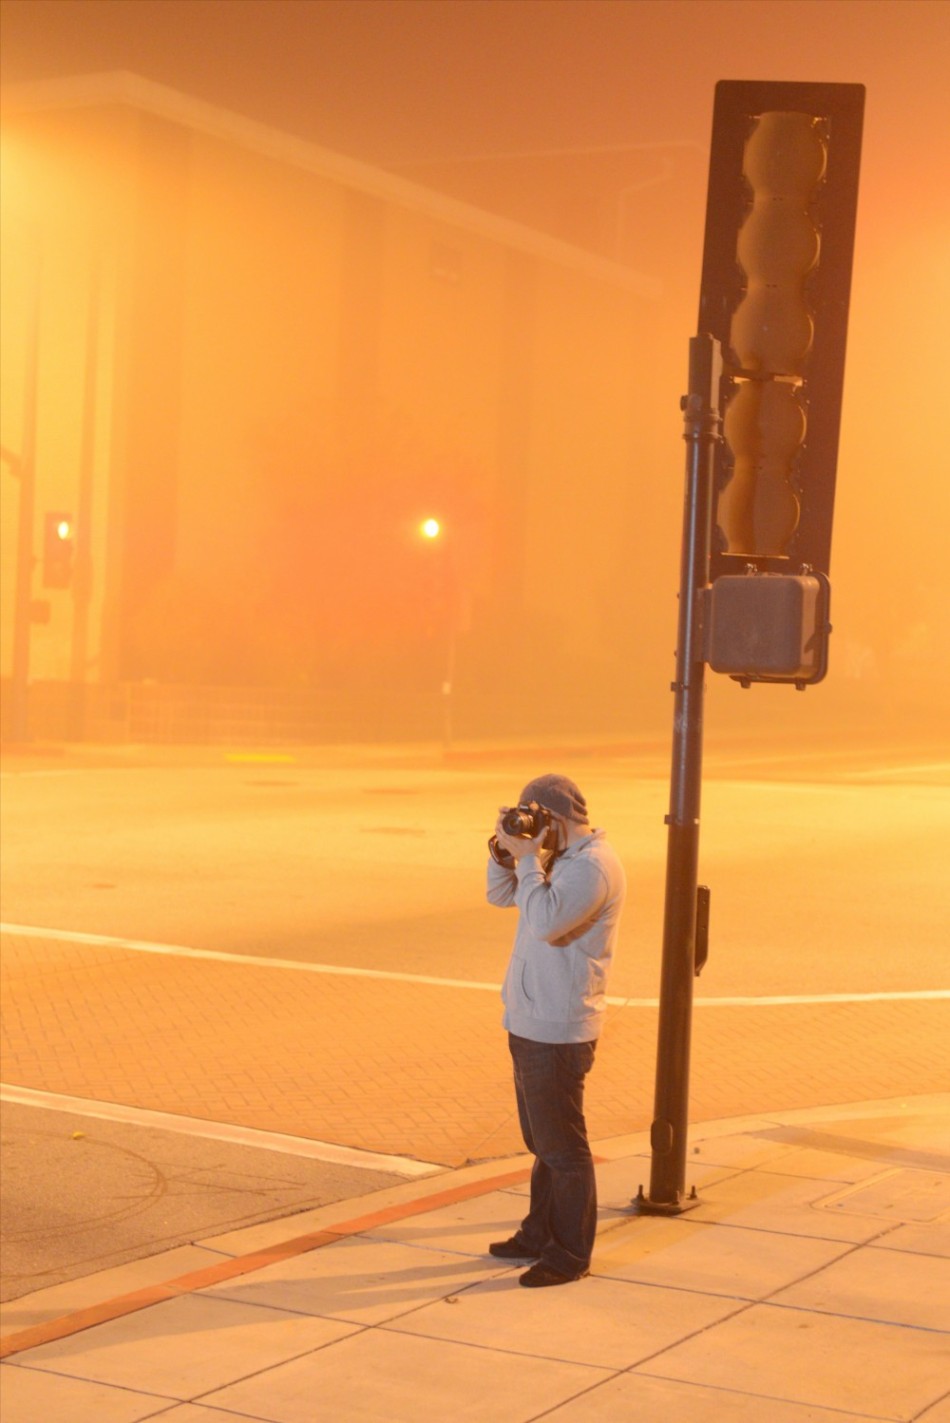 Street Light made the fog glow orange